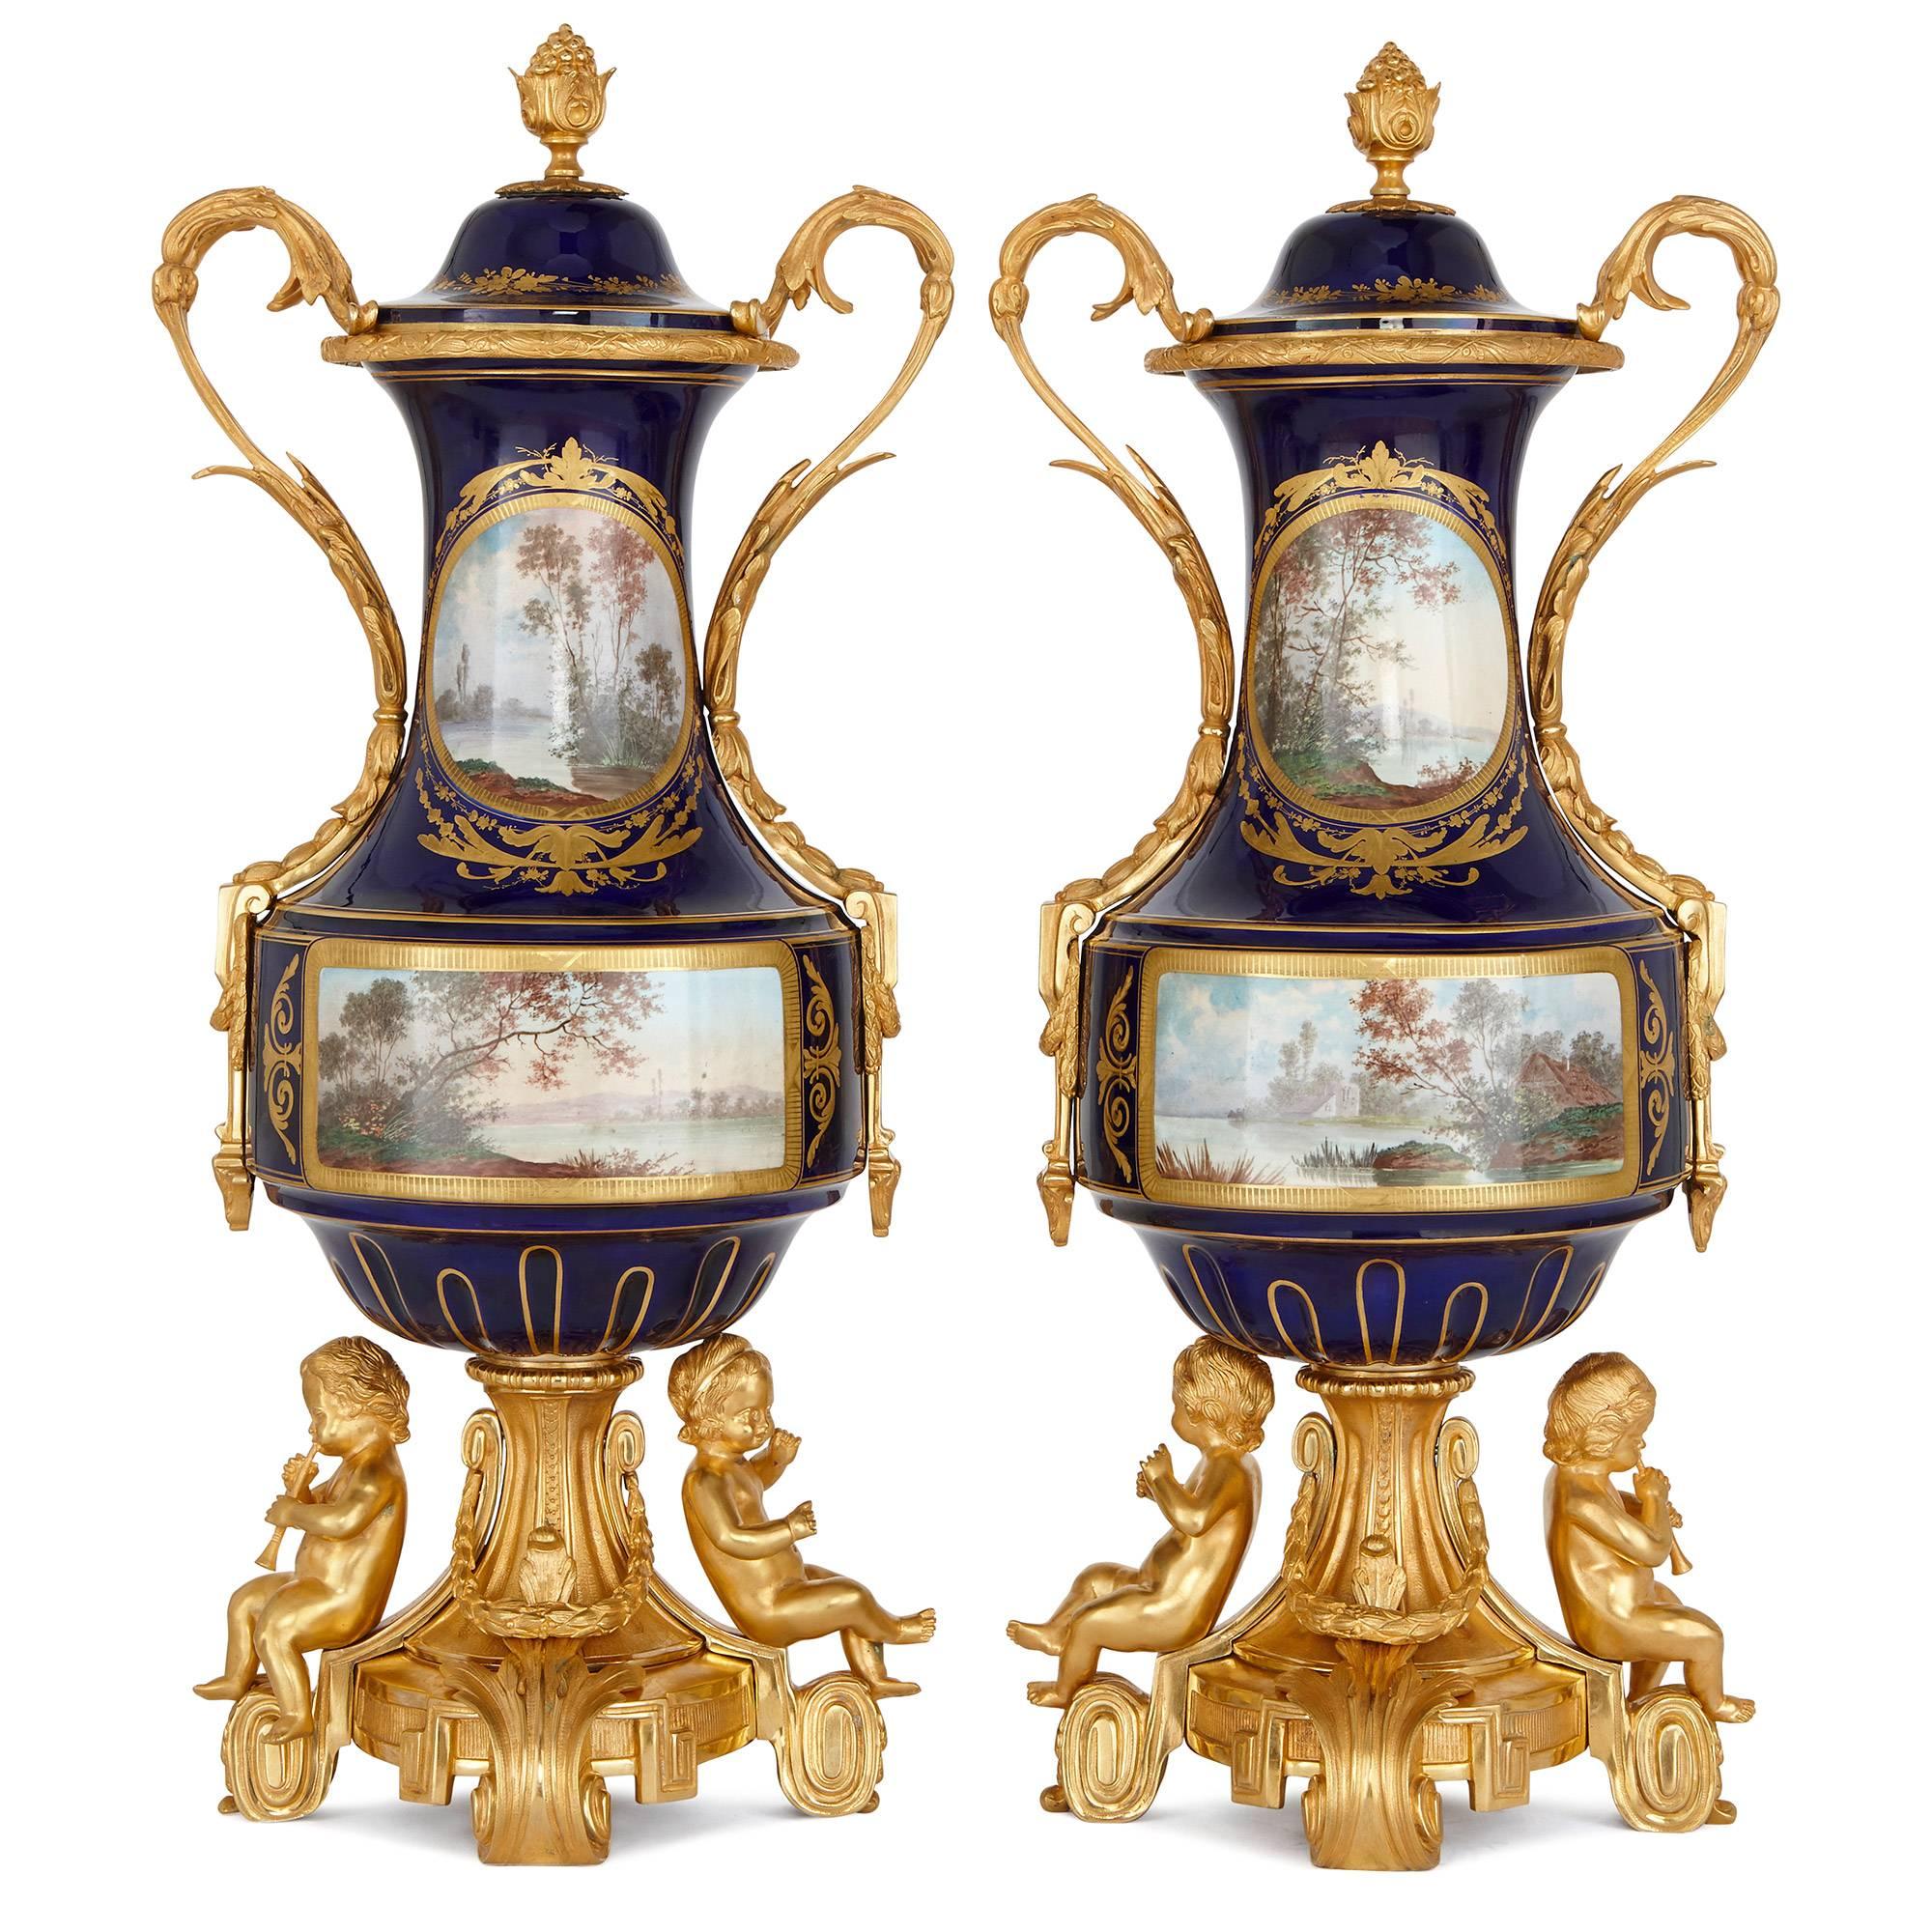 Rococo Garnitures d'horloge de style rocococo anciennes en porcelaine et bronze doré en vente